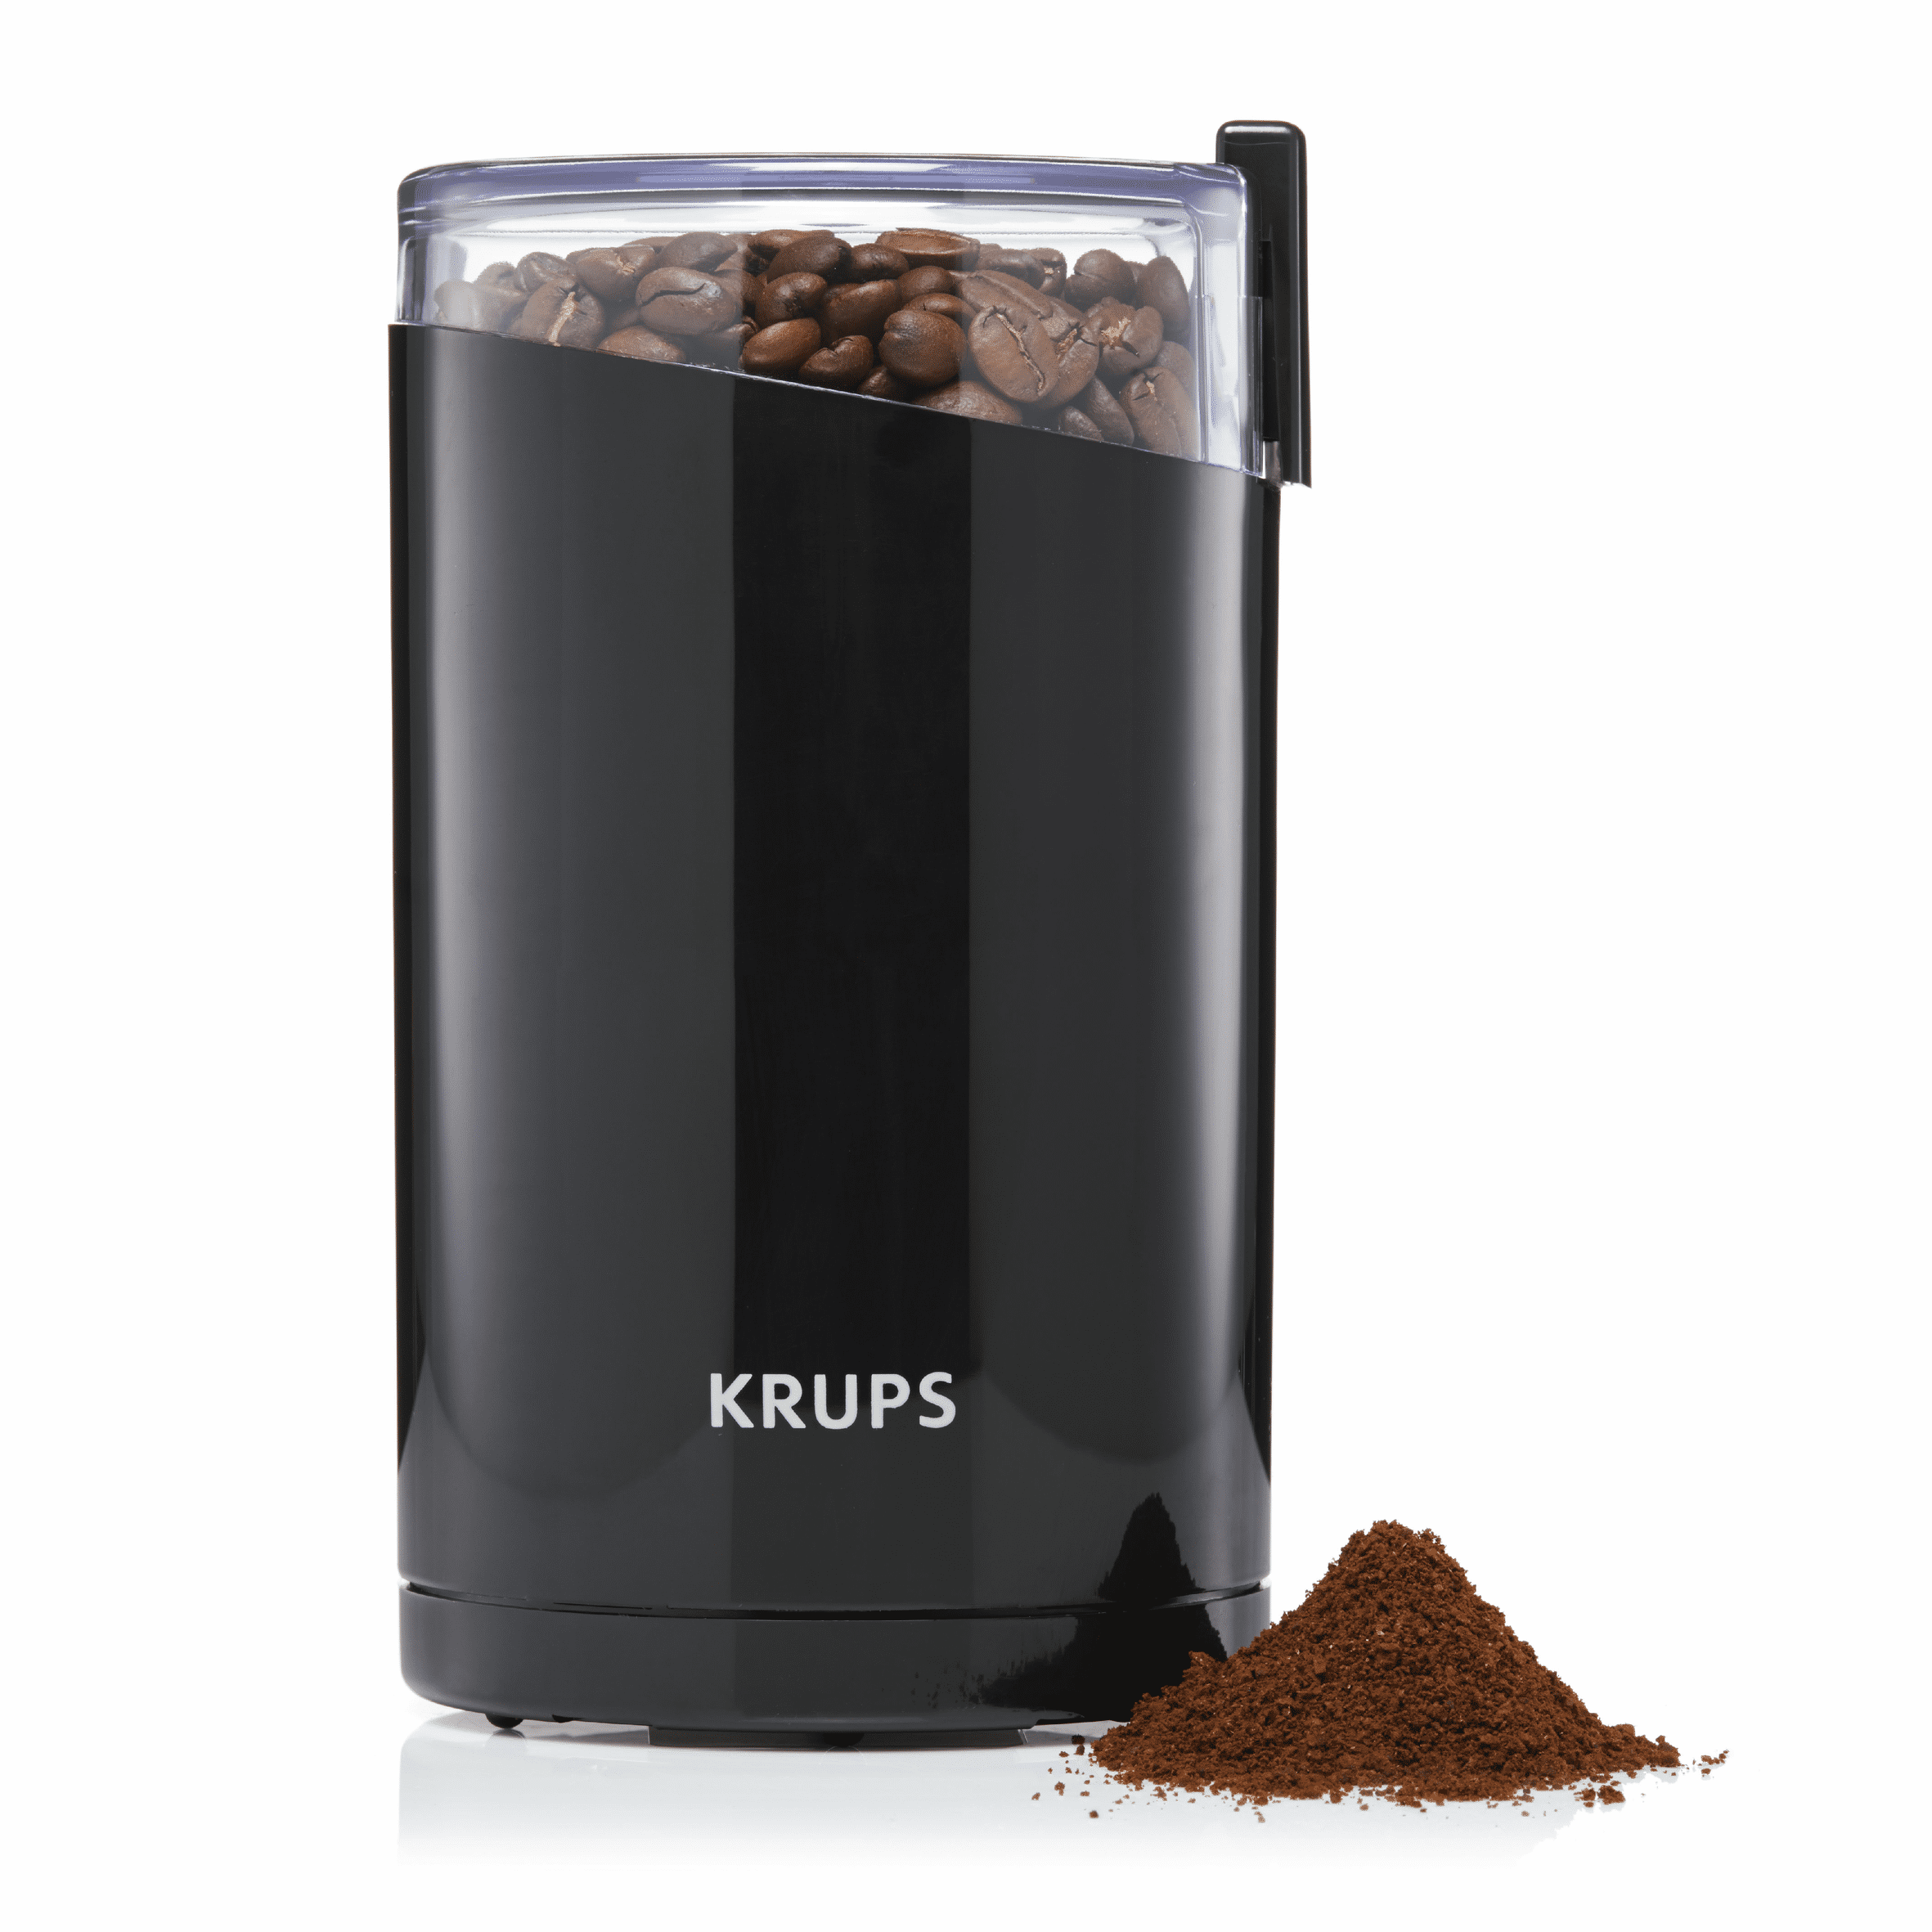 KRUPS Silent Vortex Electric Coffee and Spice Blade Grinder, Grey, GX332B50